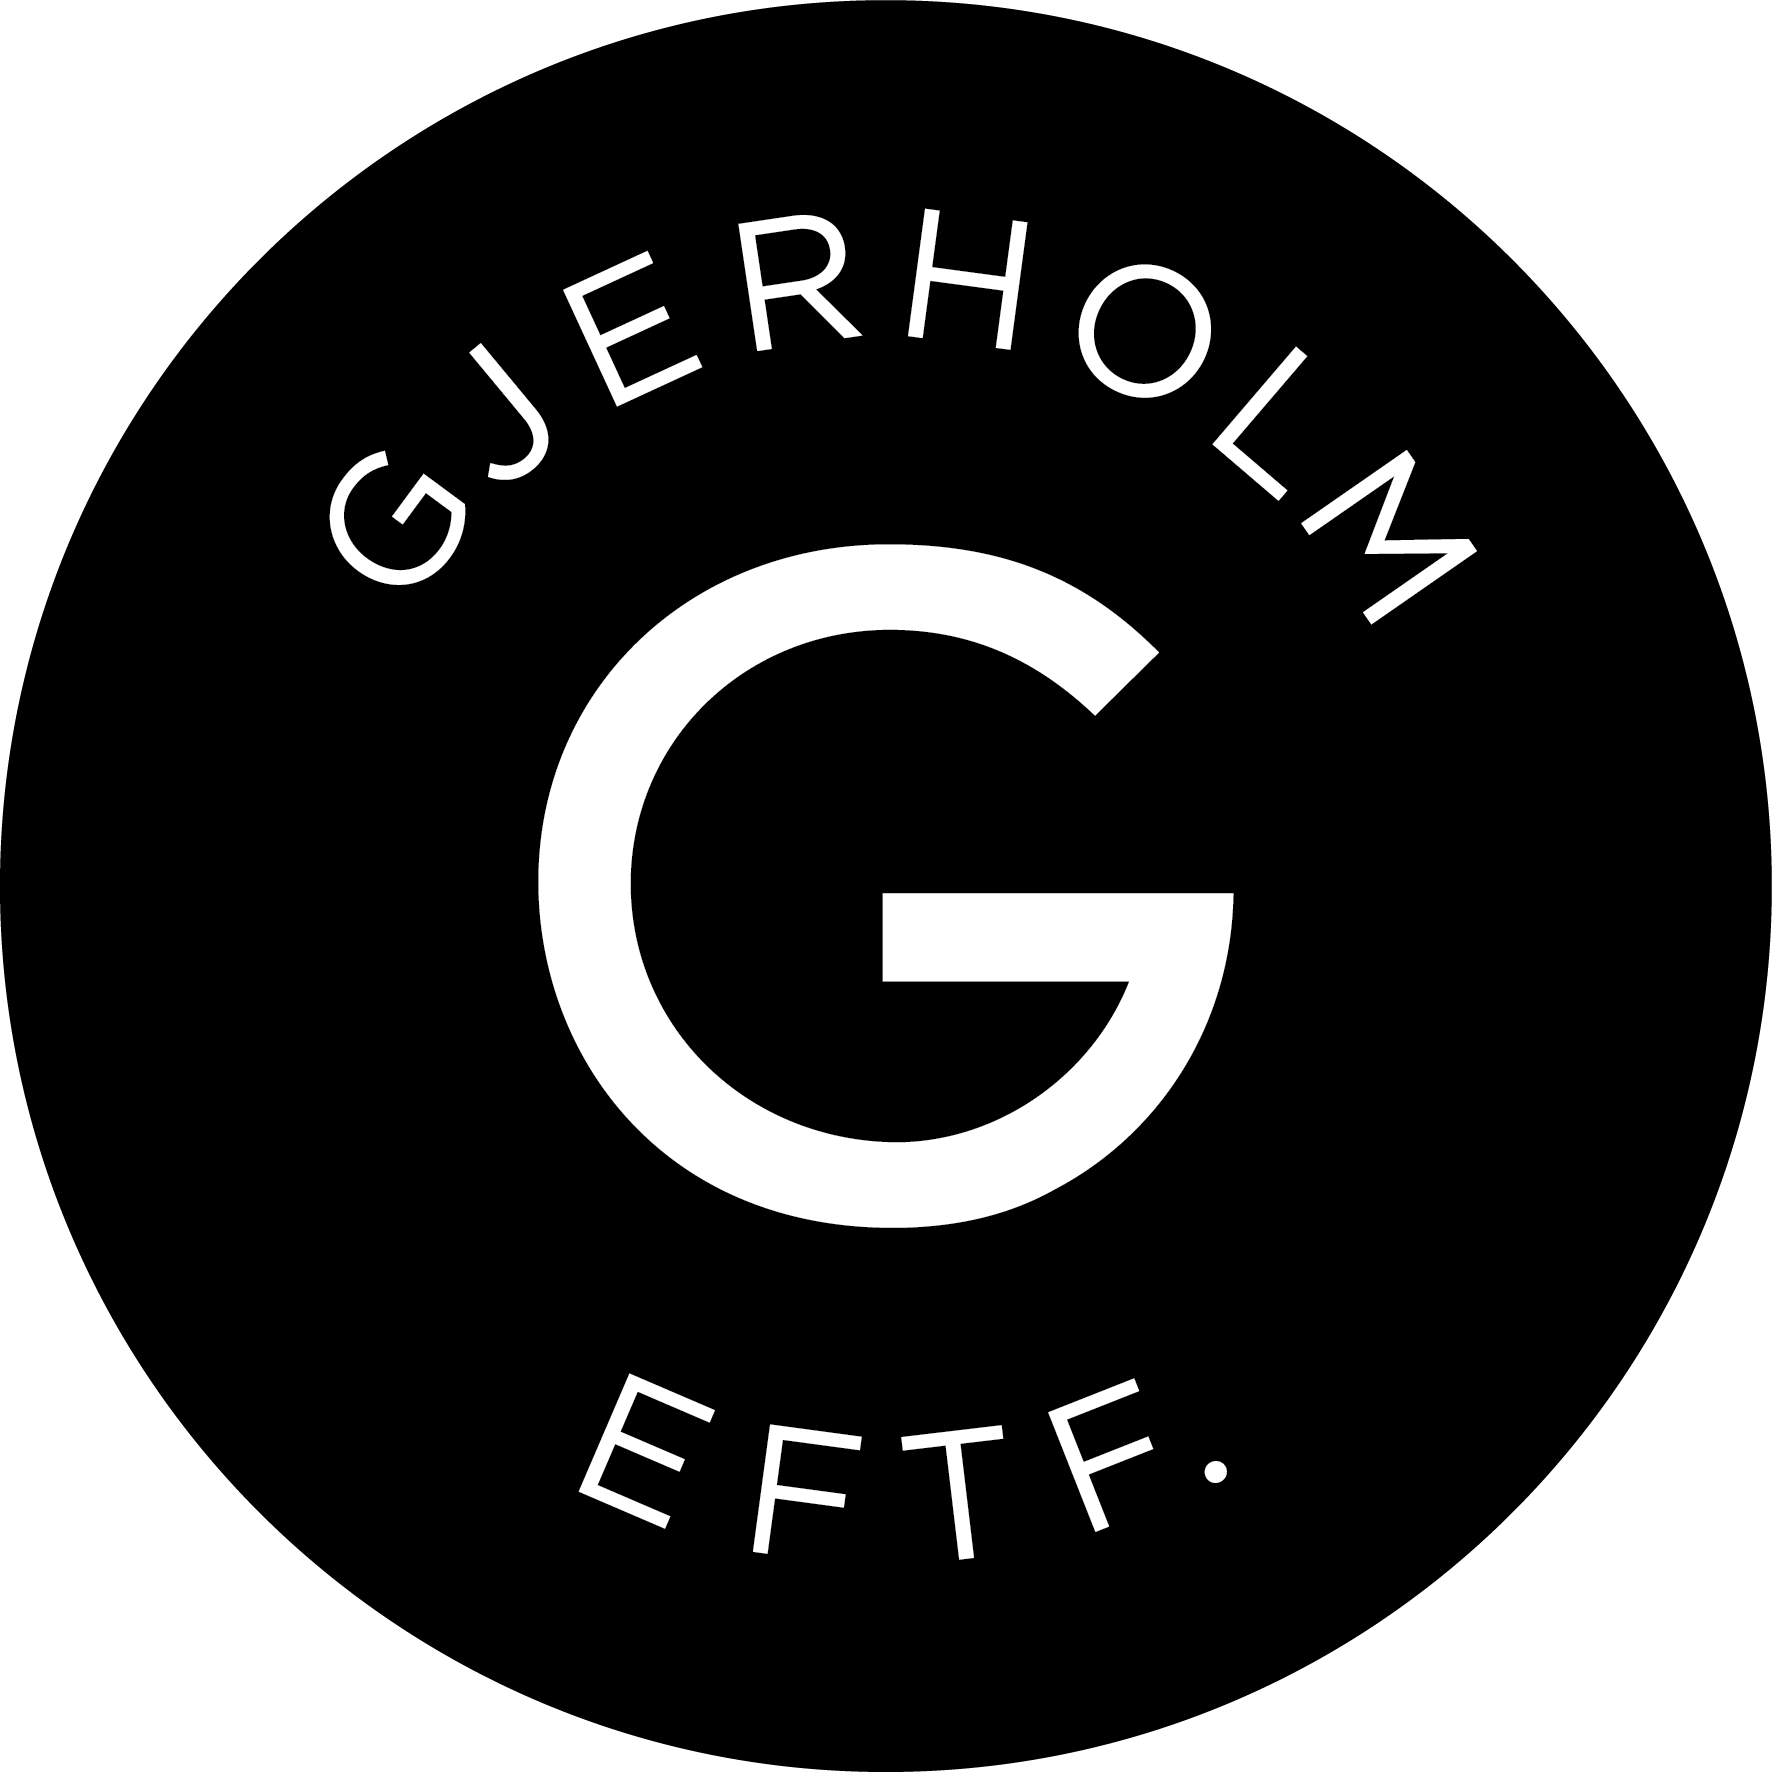 Gjerholm_logo